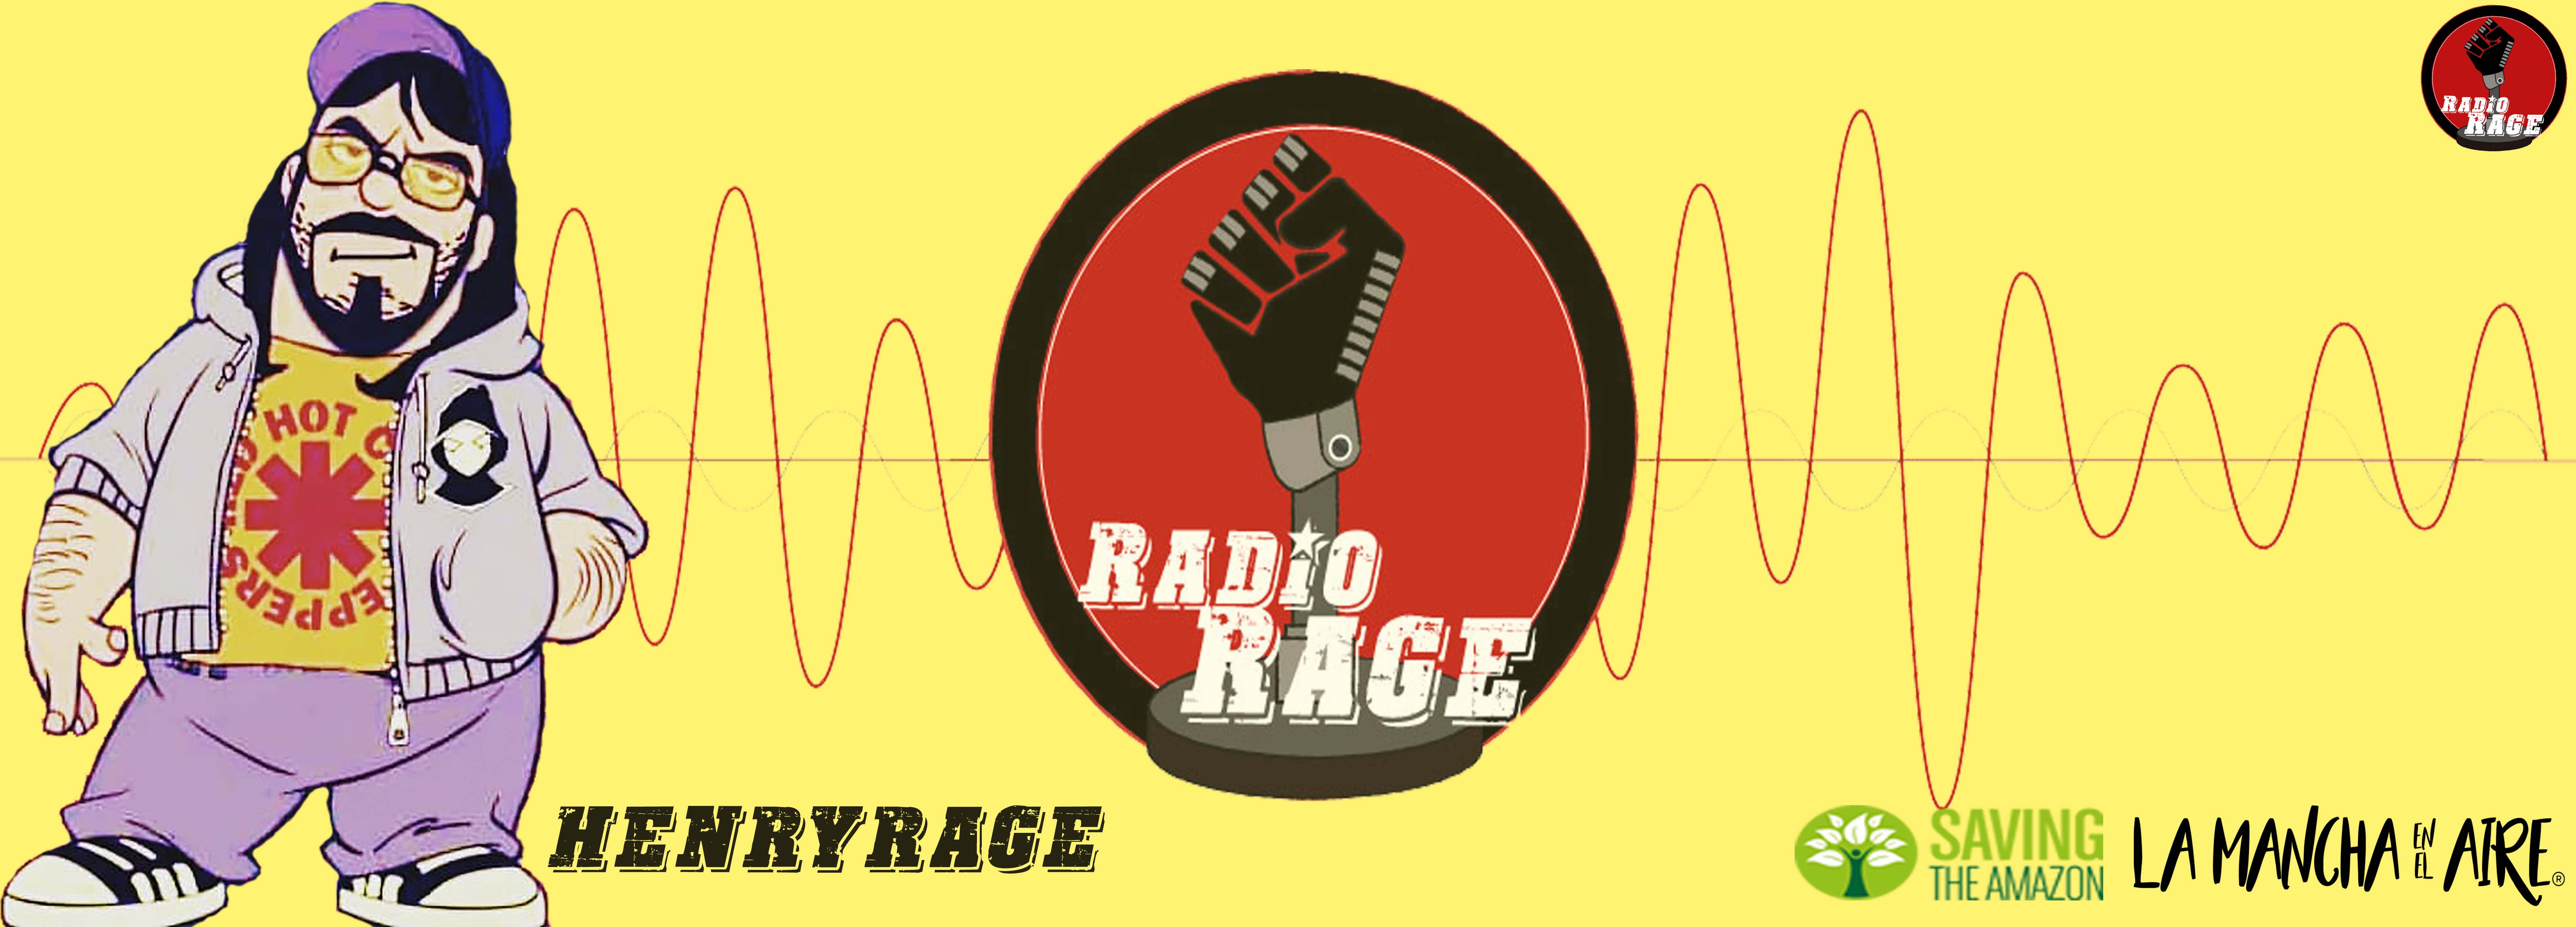 Henryrage y Radiorage